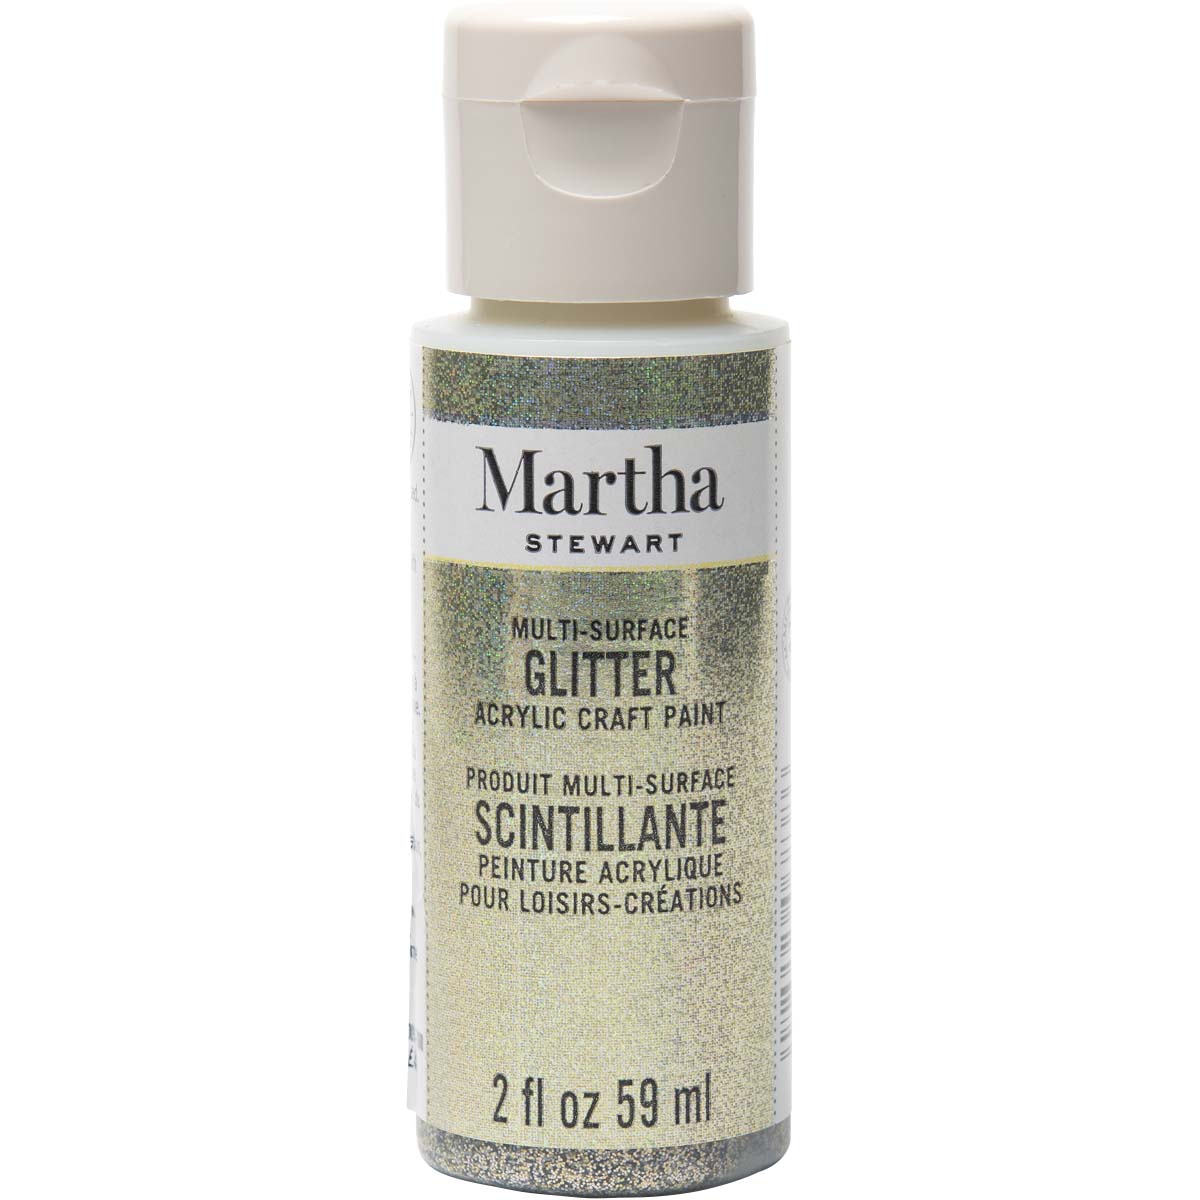 Martha Stewart ® Multi-Surface Glitter Acrylic Craft Paint - Antique Silver, 2 oz. - 32180CA